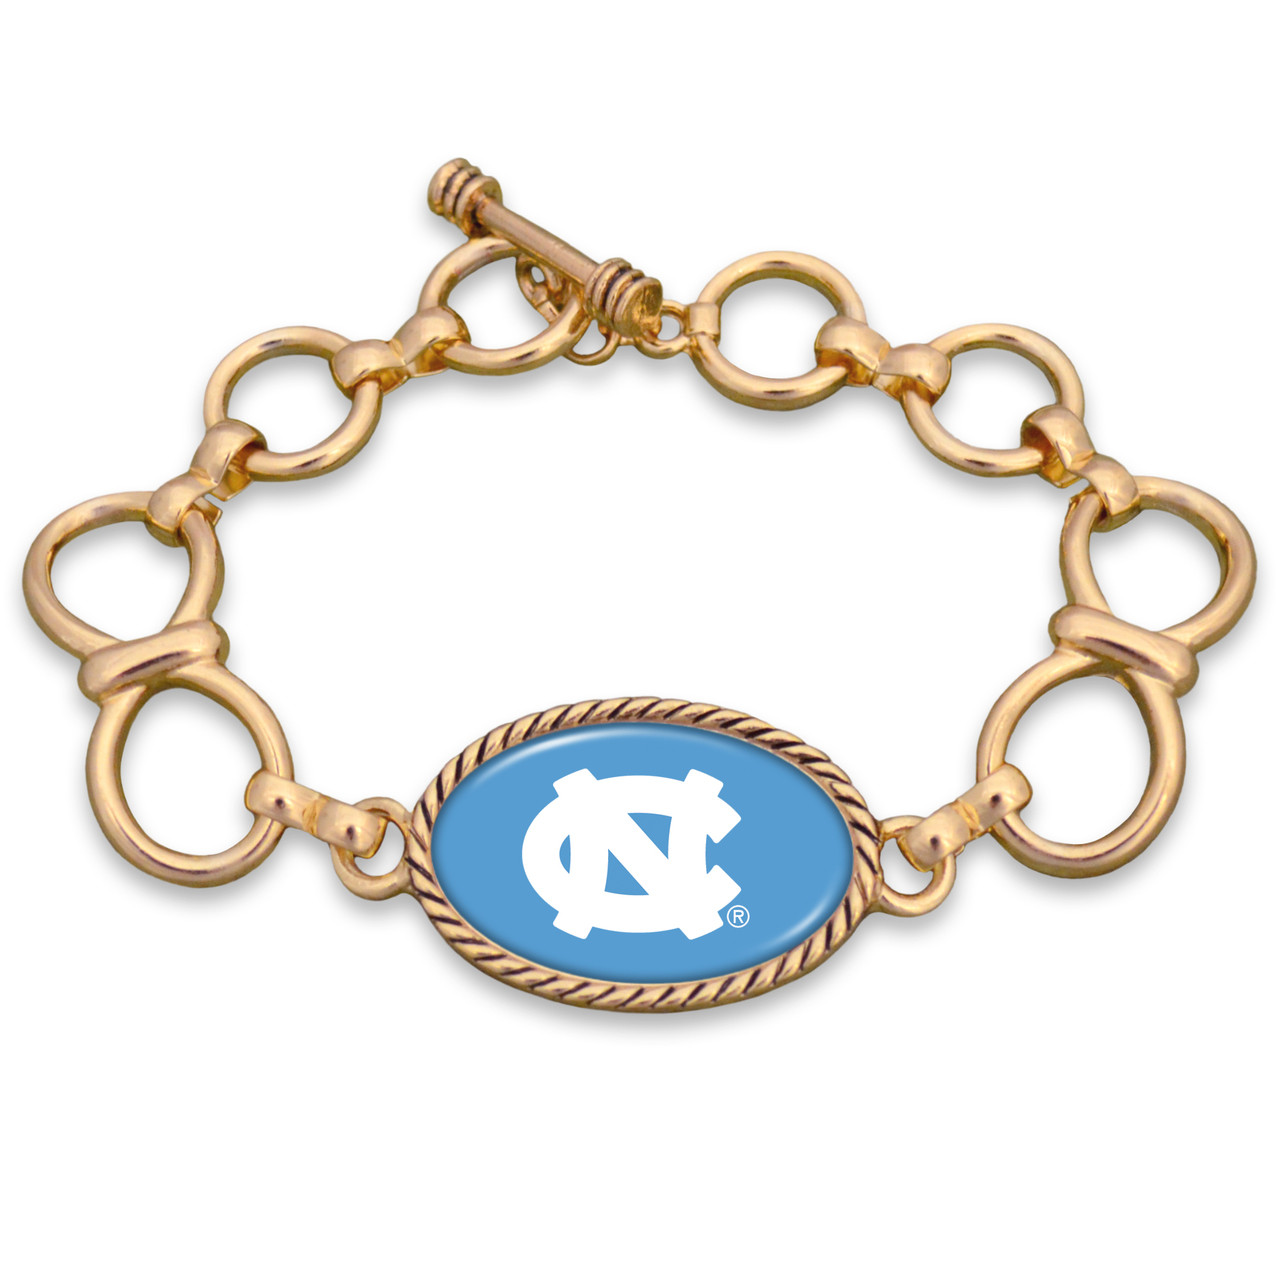 North Carolina Tar Heels Gold Chain Toggle College Bracelet